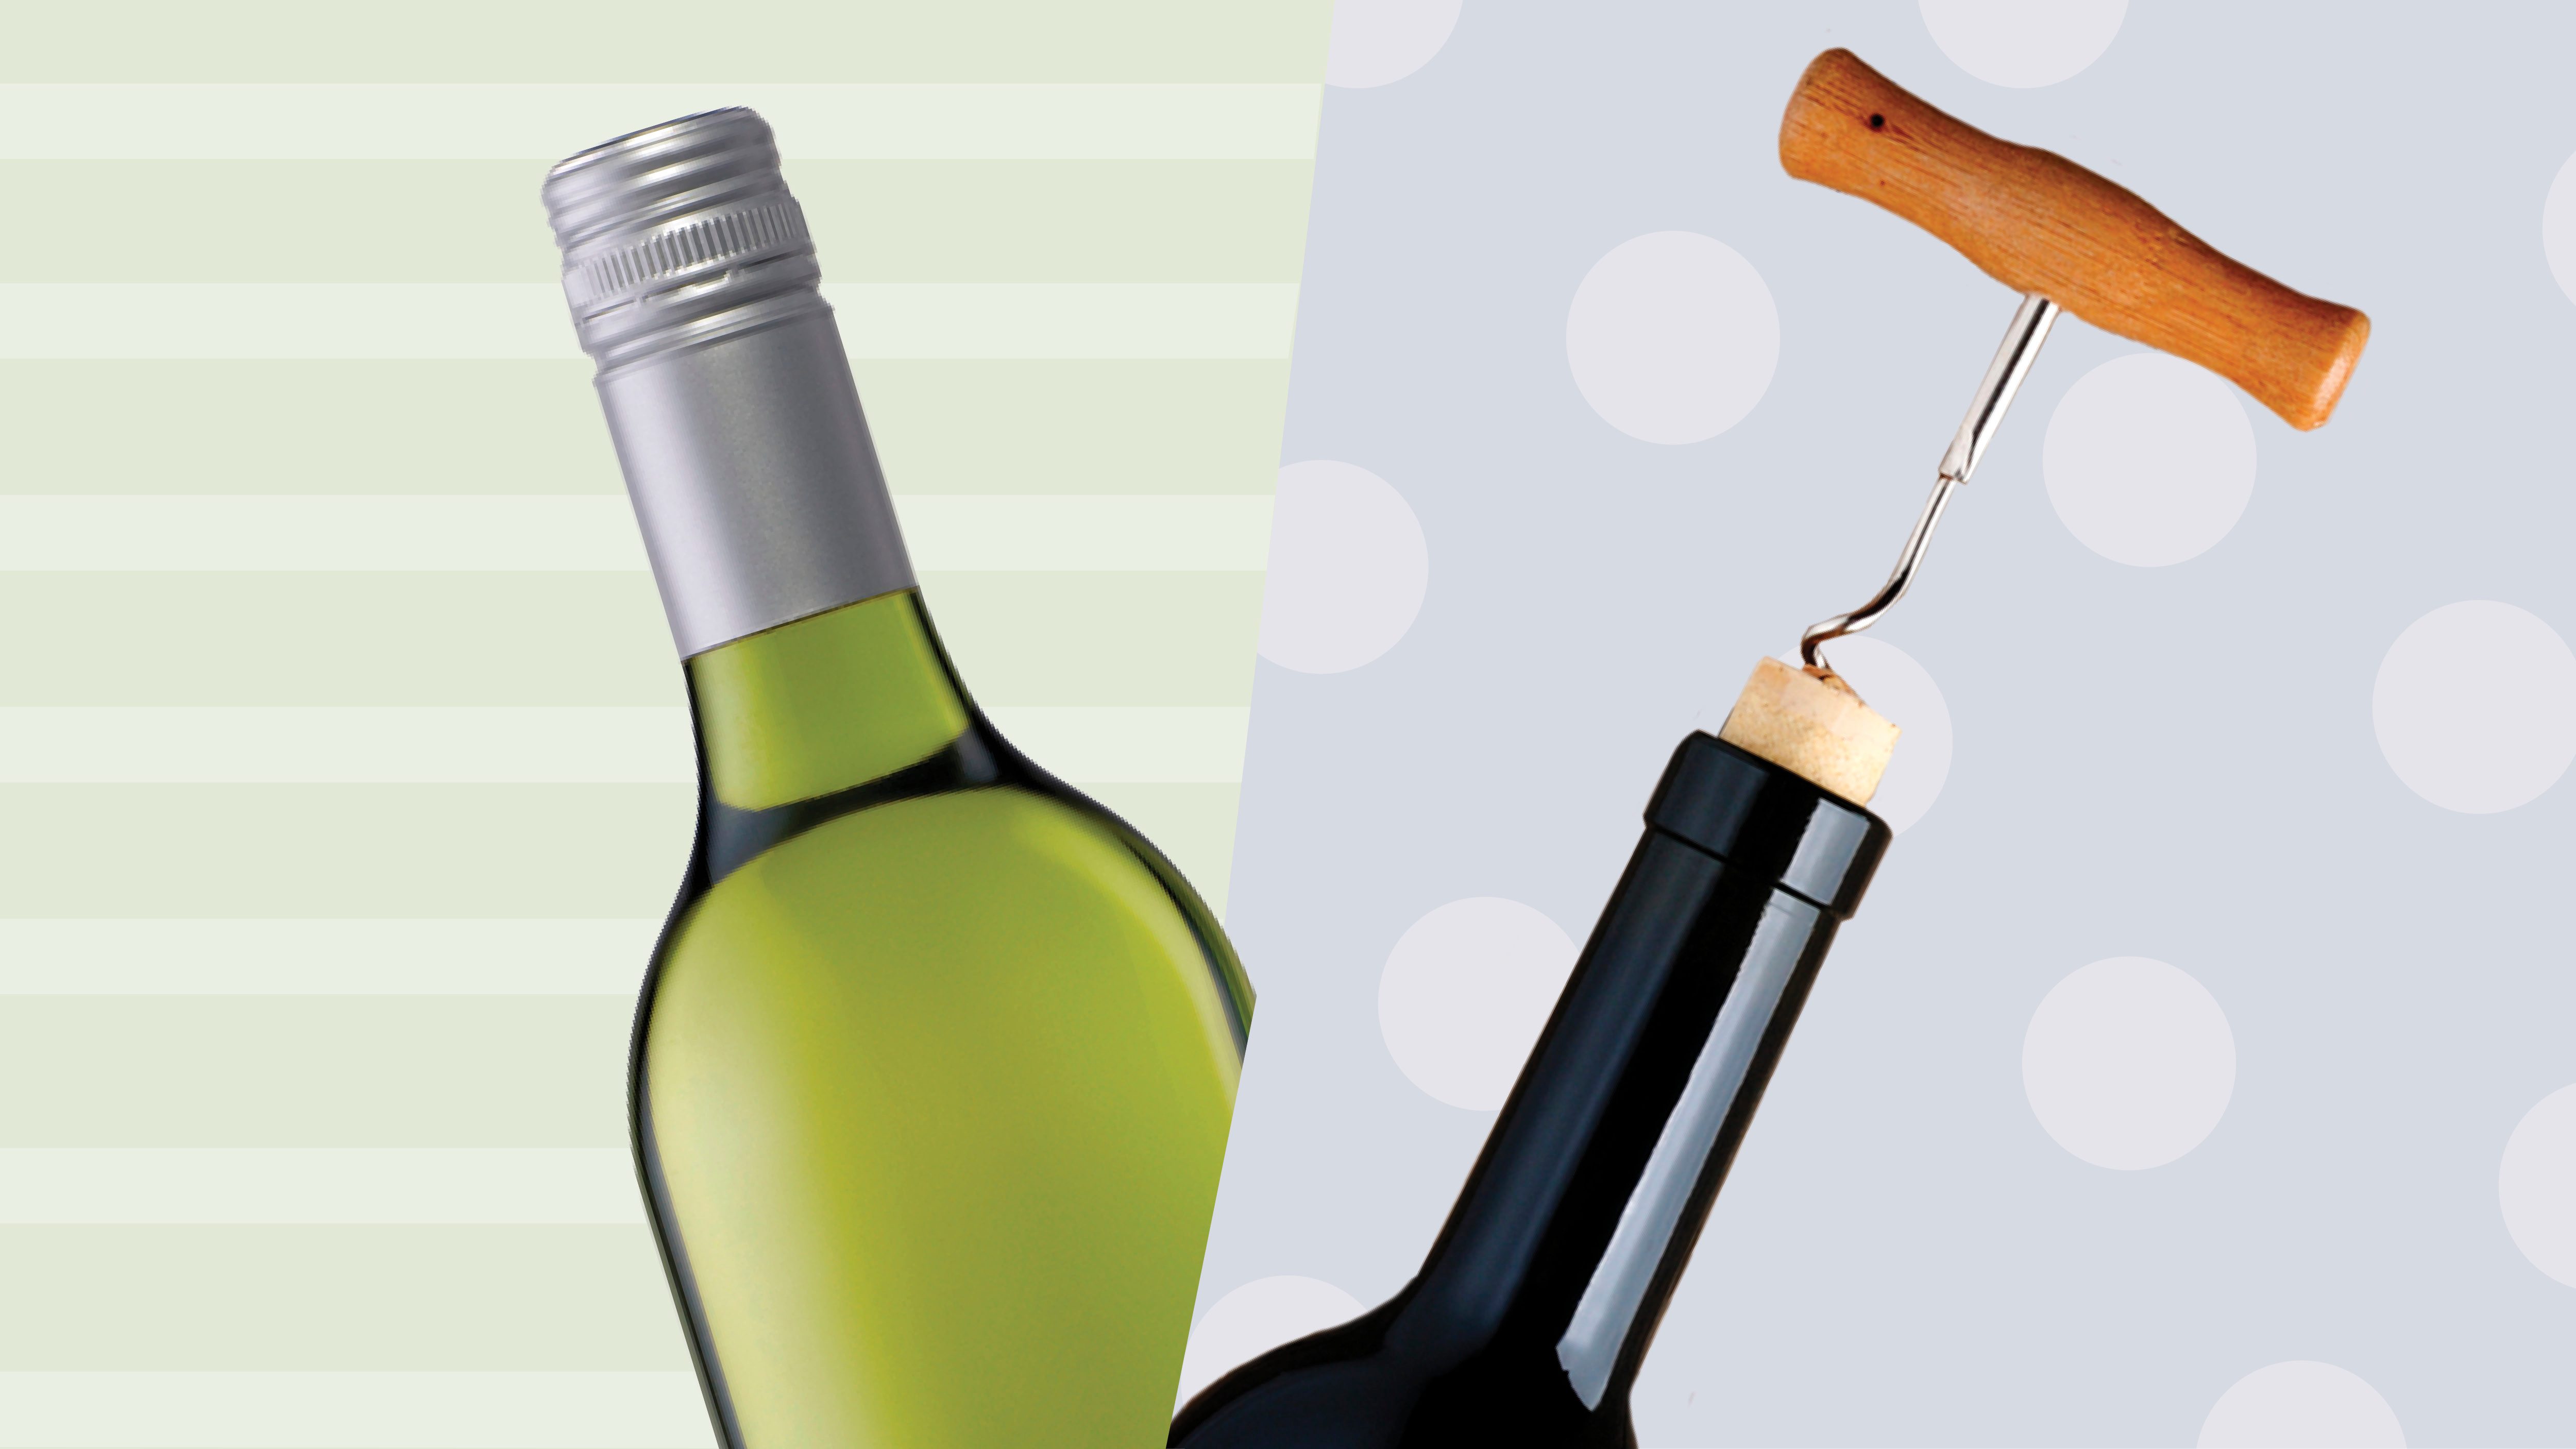 Cork-sealed wine vs. screw-top wine